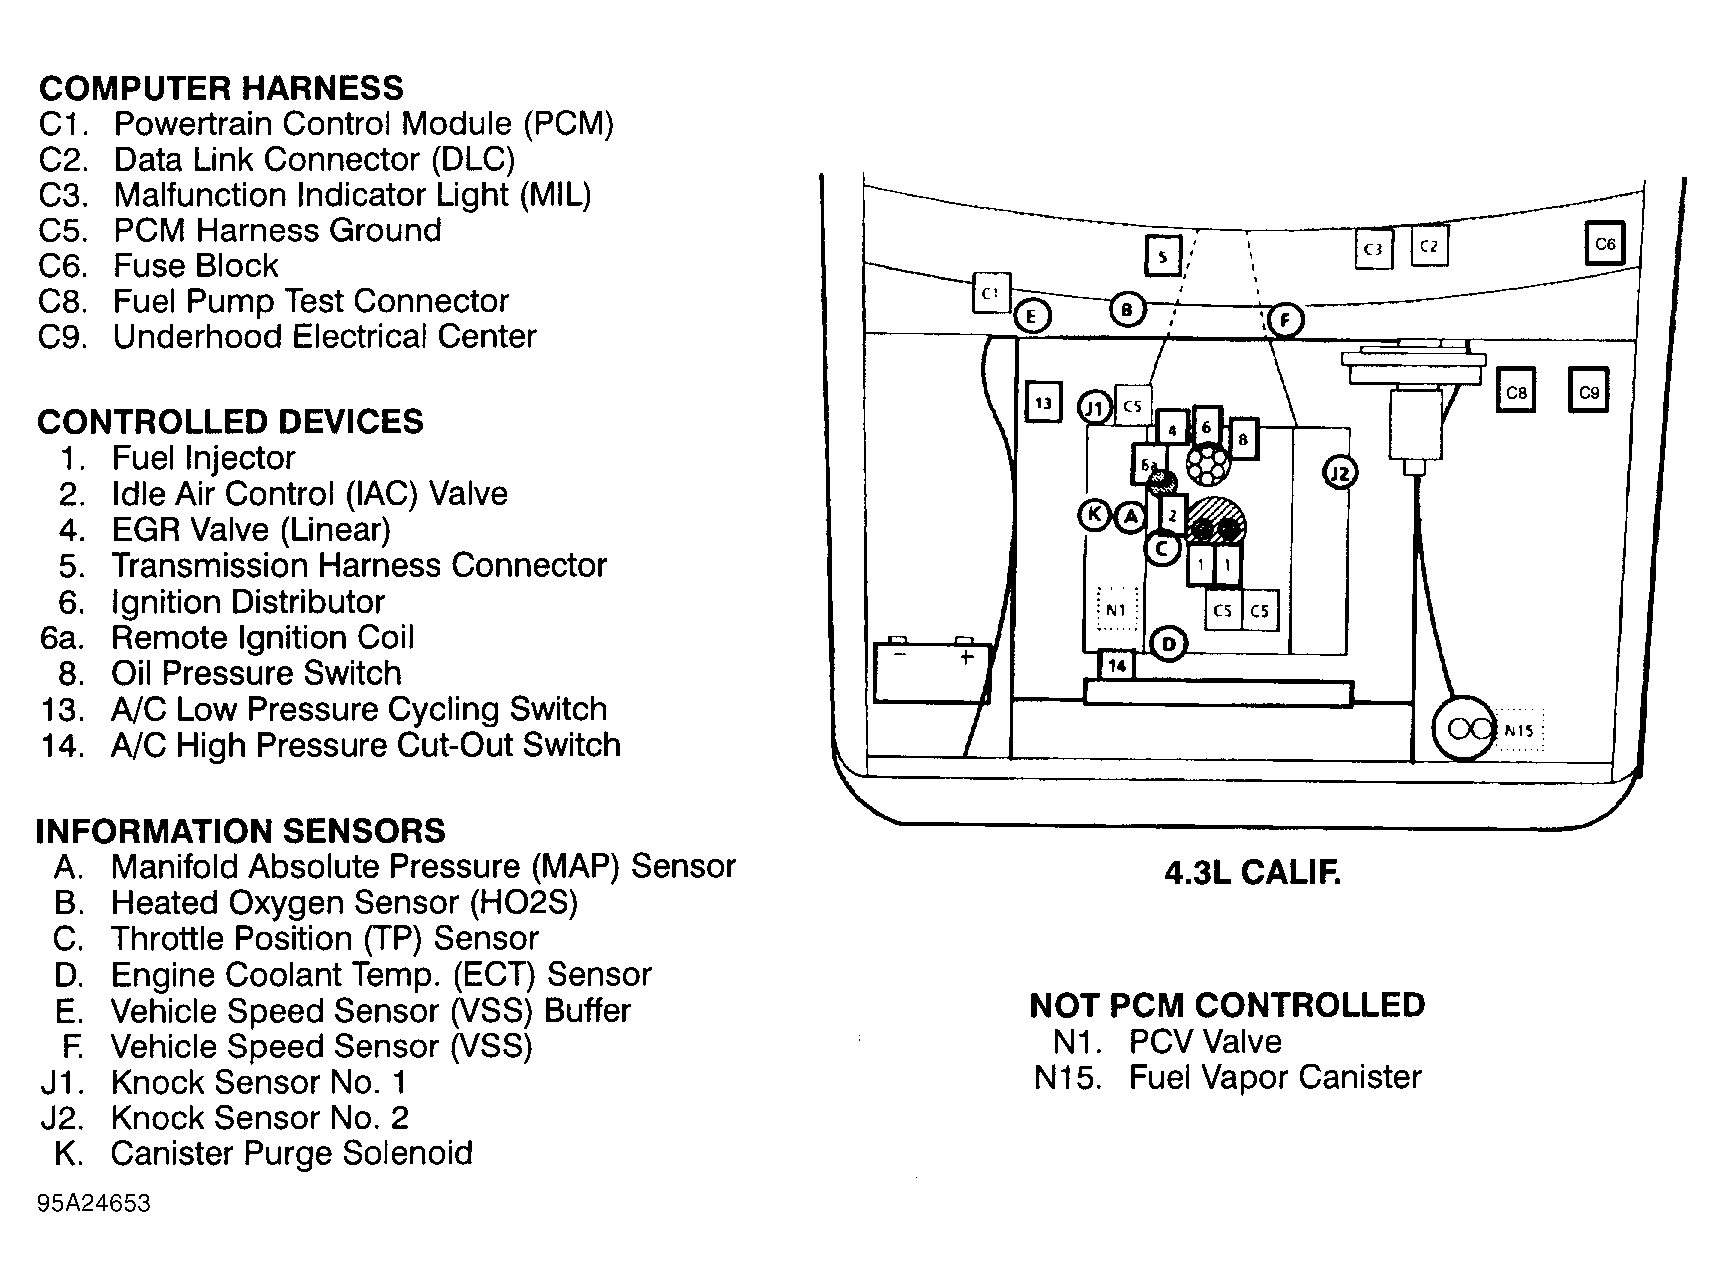 Chevrolet Pickup C2500 1995 - Component Locations -  Engine Compartment (4.3L Calif.)